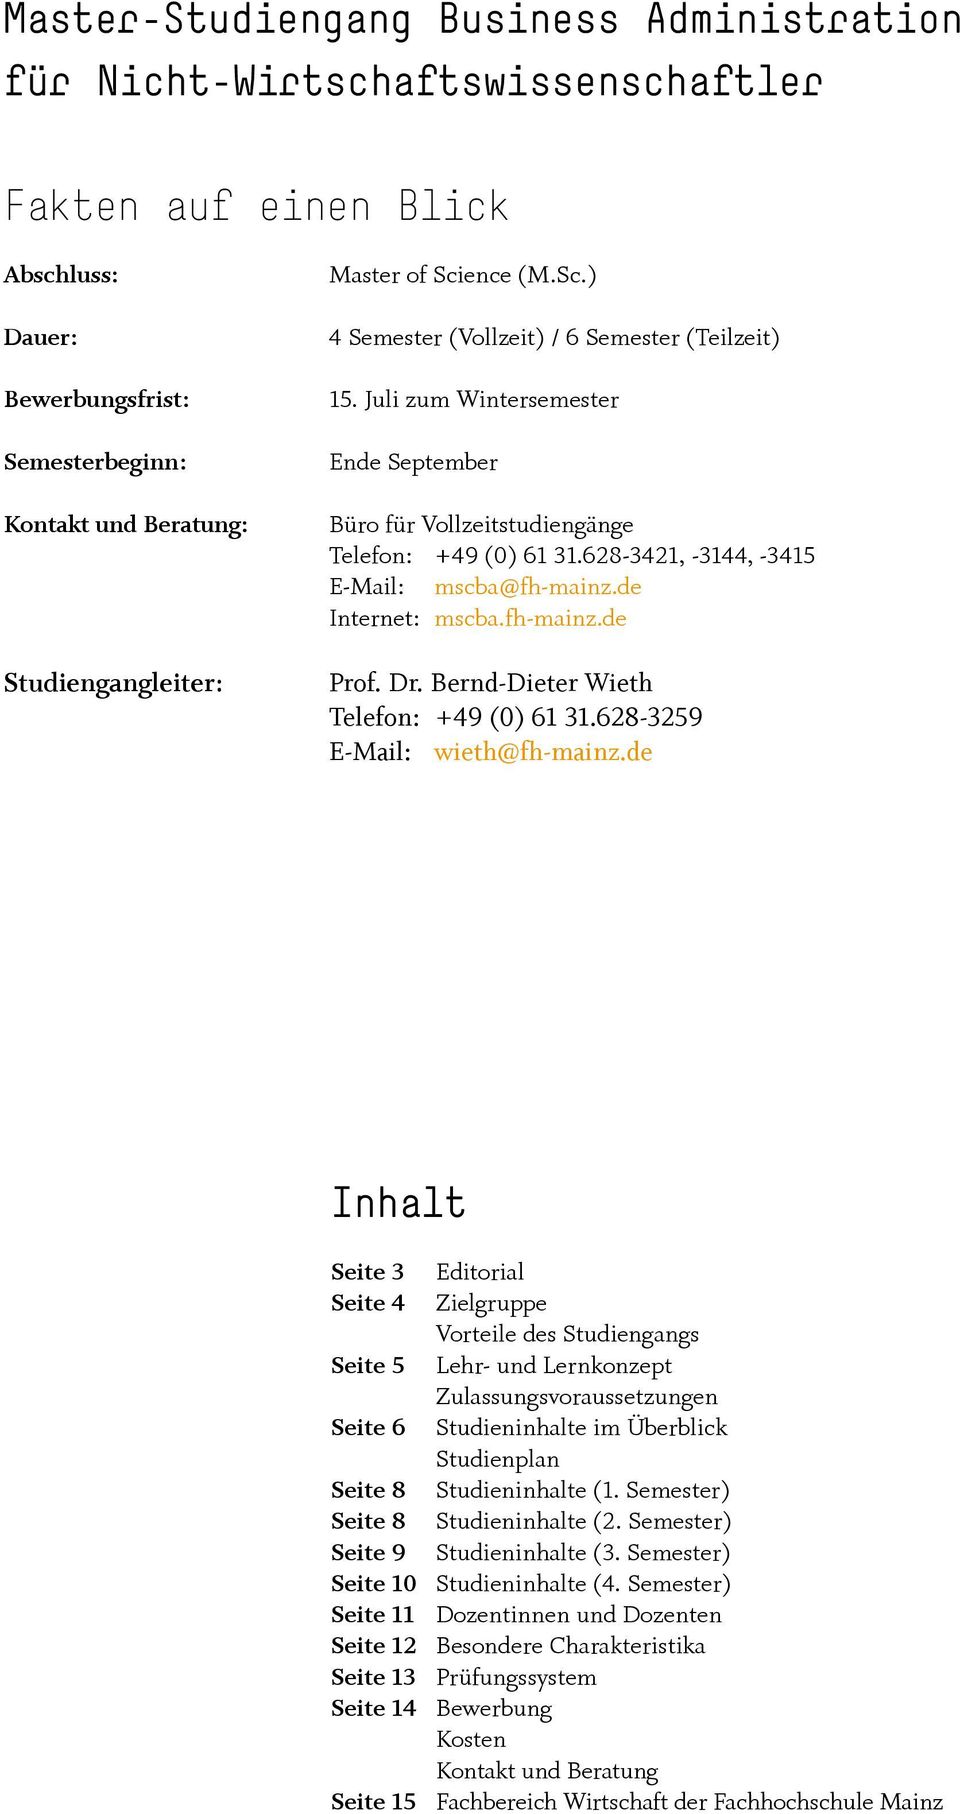 628-3421, -3144, -3415 E-Mail: mscba@fh-mainz.de Internet: mscba.fh-mainz.de Prof. Dr. Bernd-Dieter Wieth Telefon: +49 (0) 61 31.628-3259 E-Mail: wieth@fh-mainz.